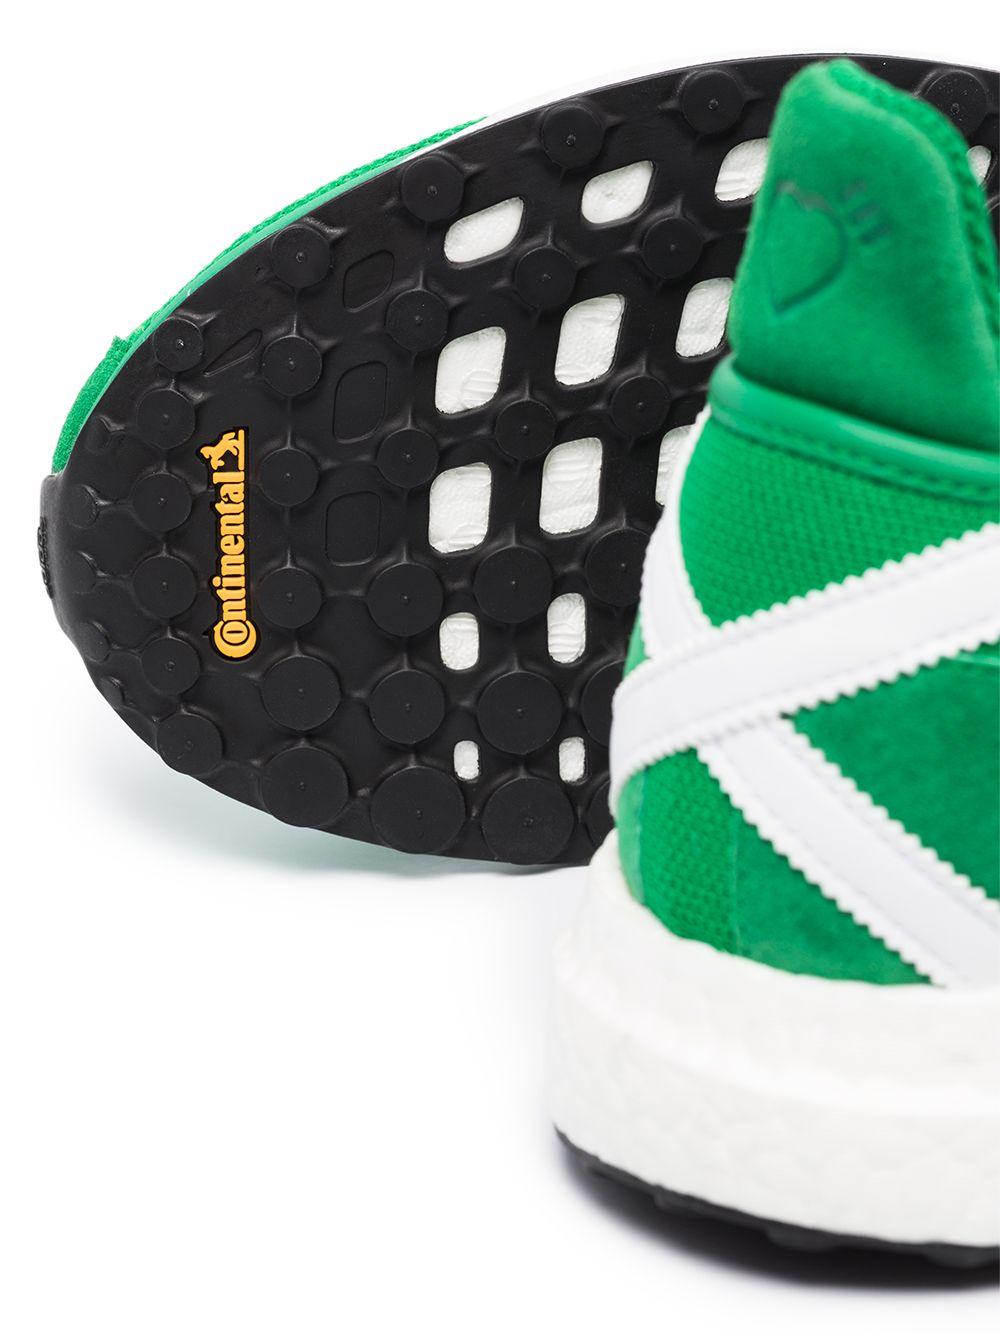 Adidas x Human Made Tokio Solar Green Sneakers - Farfetch